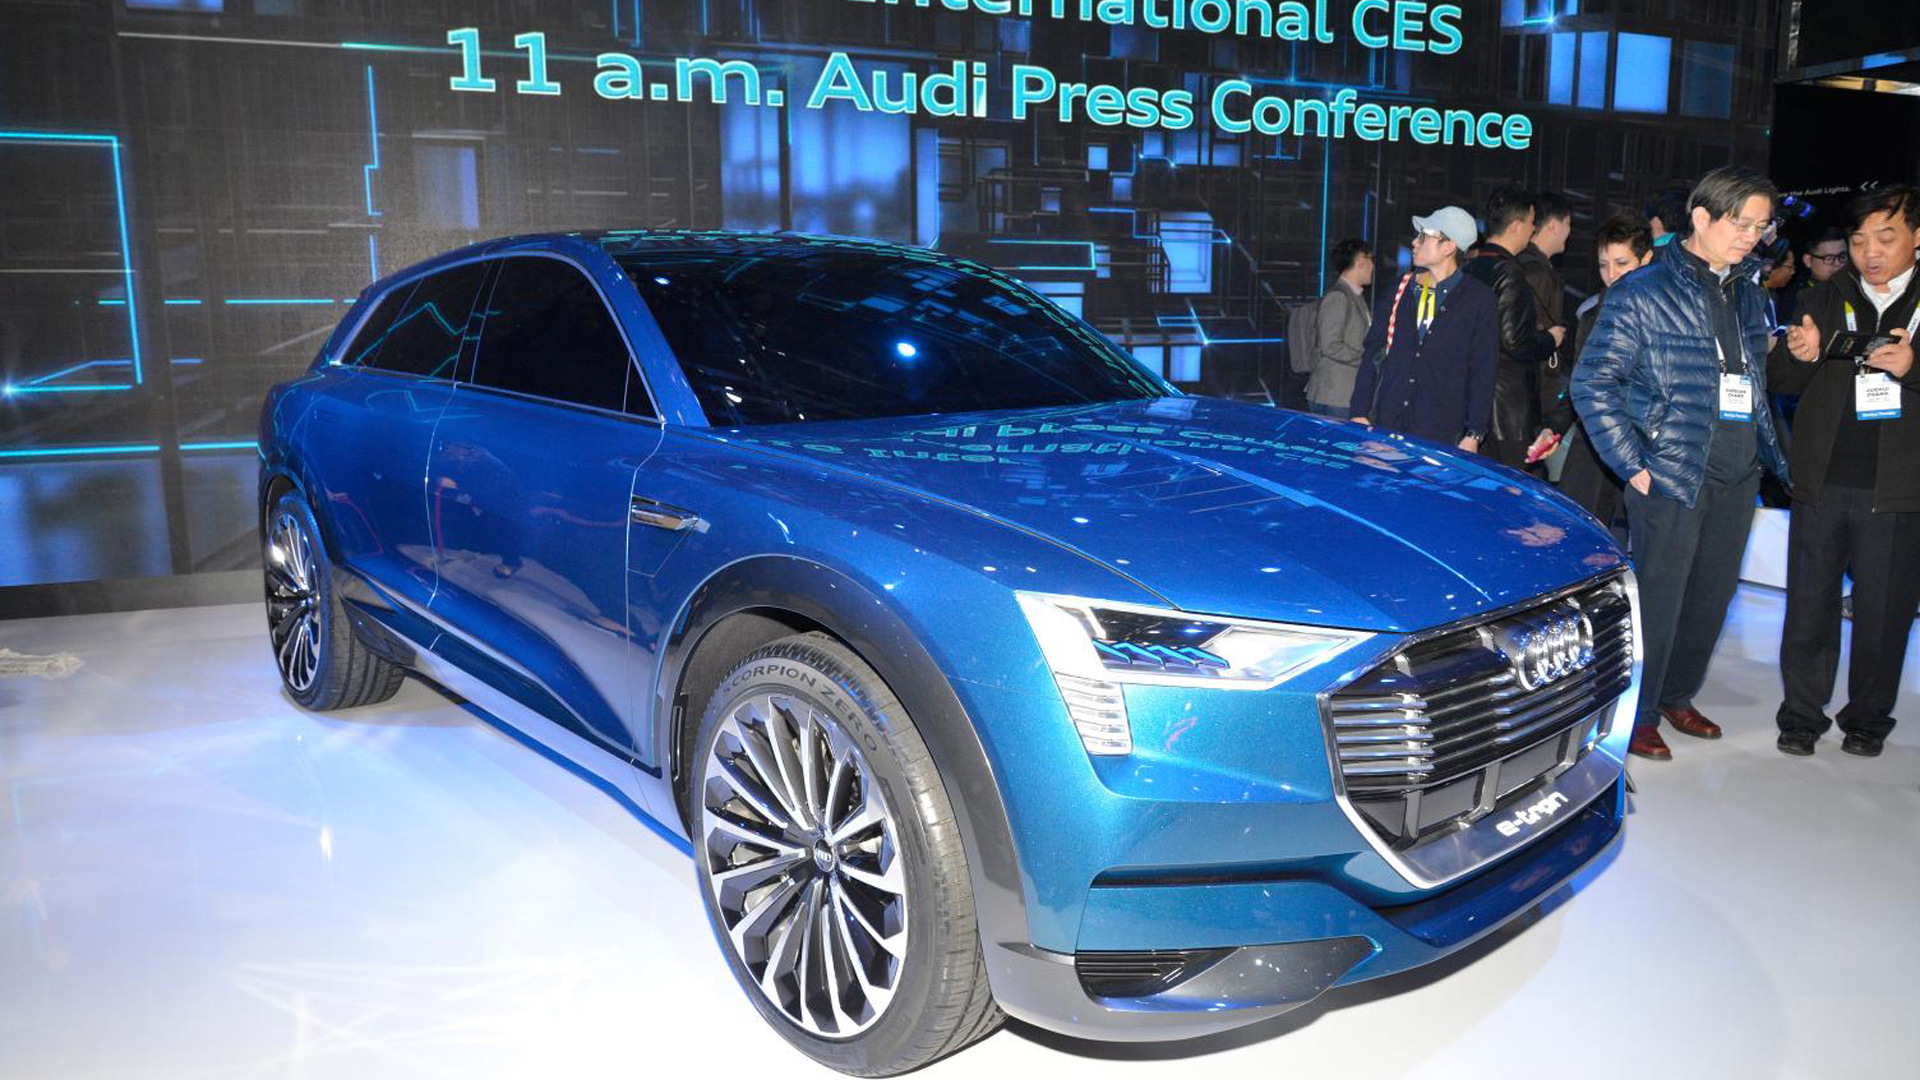 Audi e-tron Quattro concept - 2016 Consumer Electronics Show